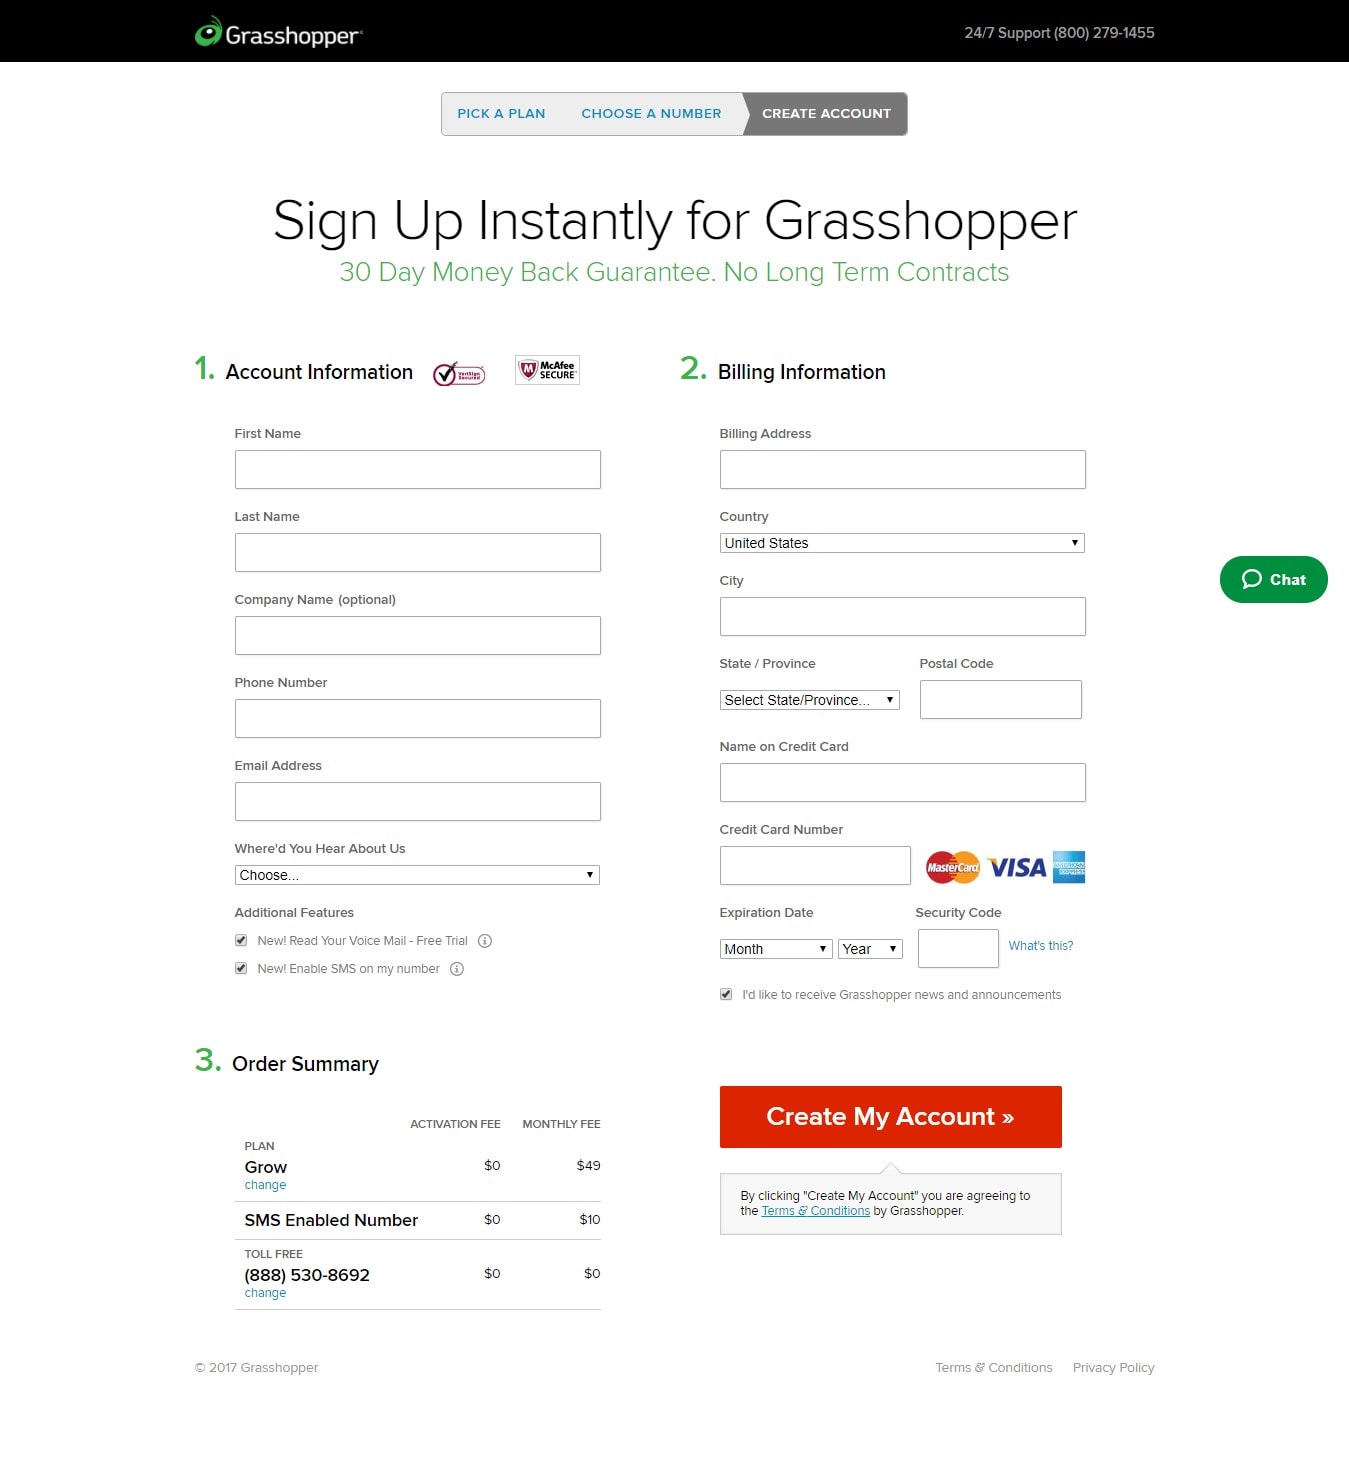 Grasshopper checkout process- Grasshopper promotional codes